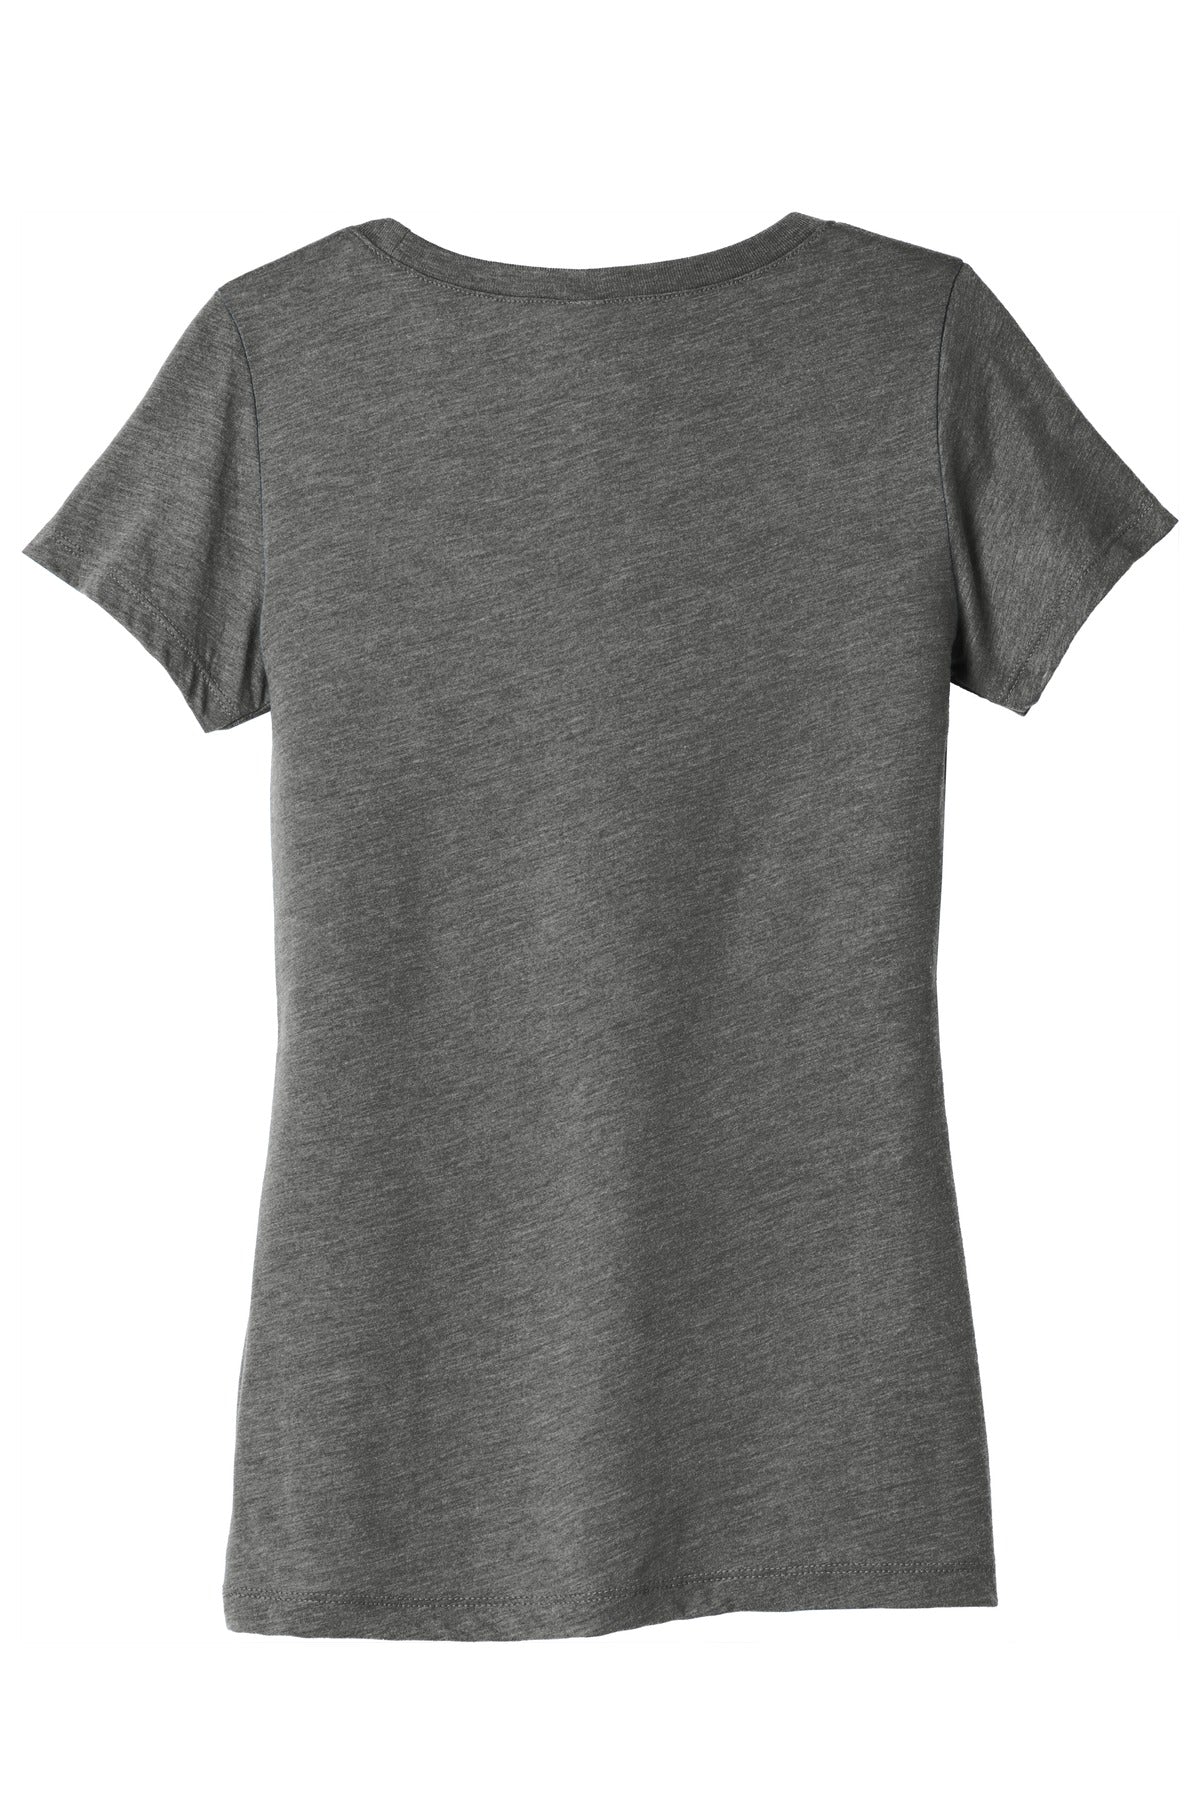 BELLA+CANVAS Women's Triblend Short Sleeve Tee. BC8413 - BT Imprintables Shirts